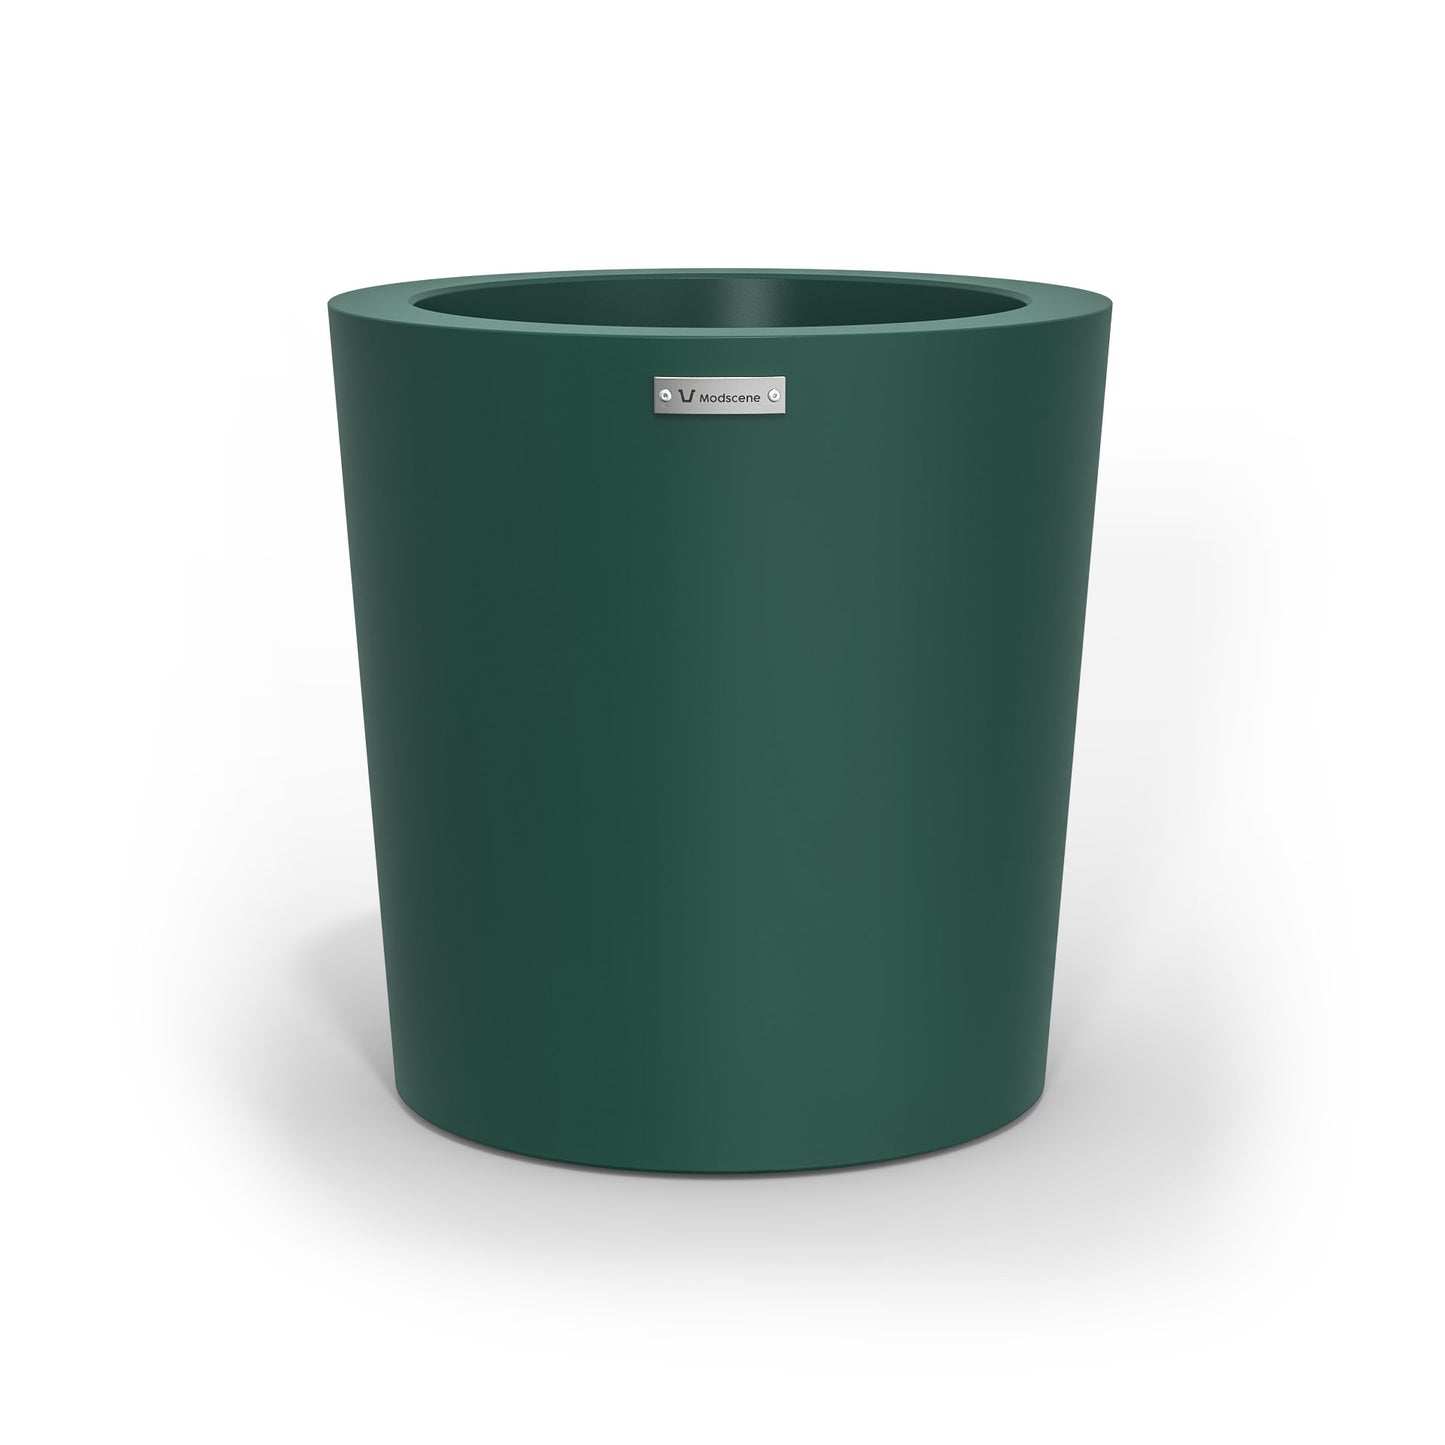 A modern style planter pot in an emerald green colour.